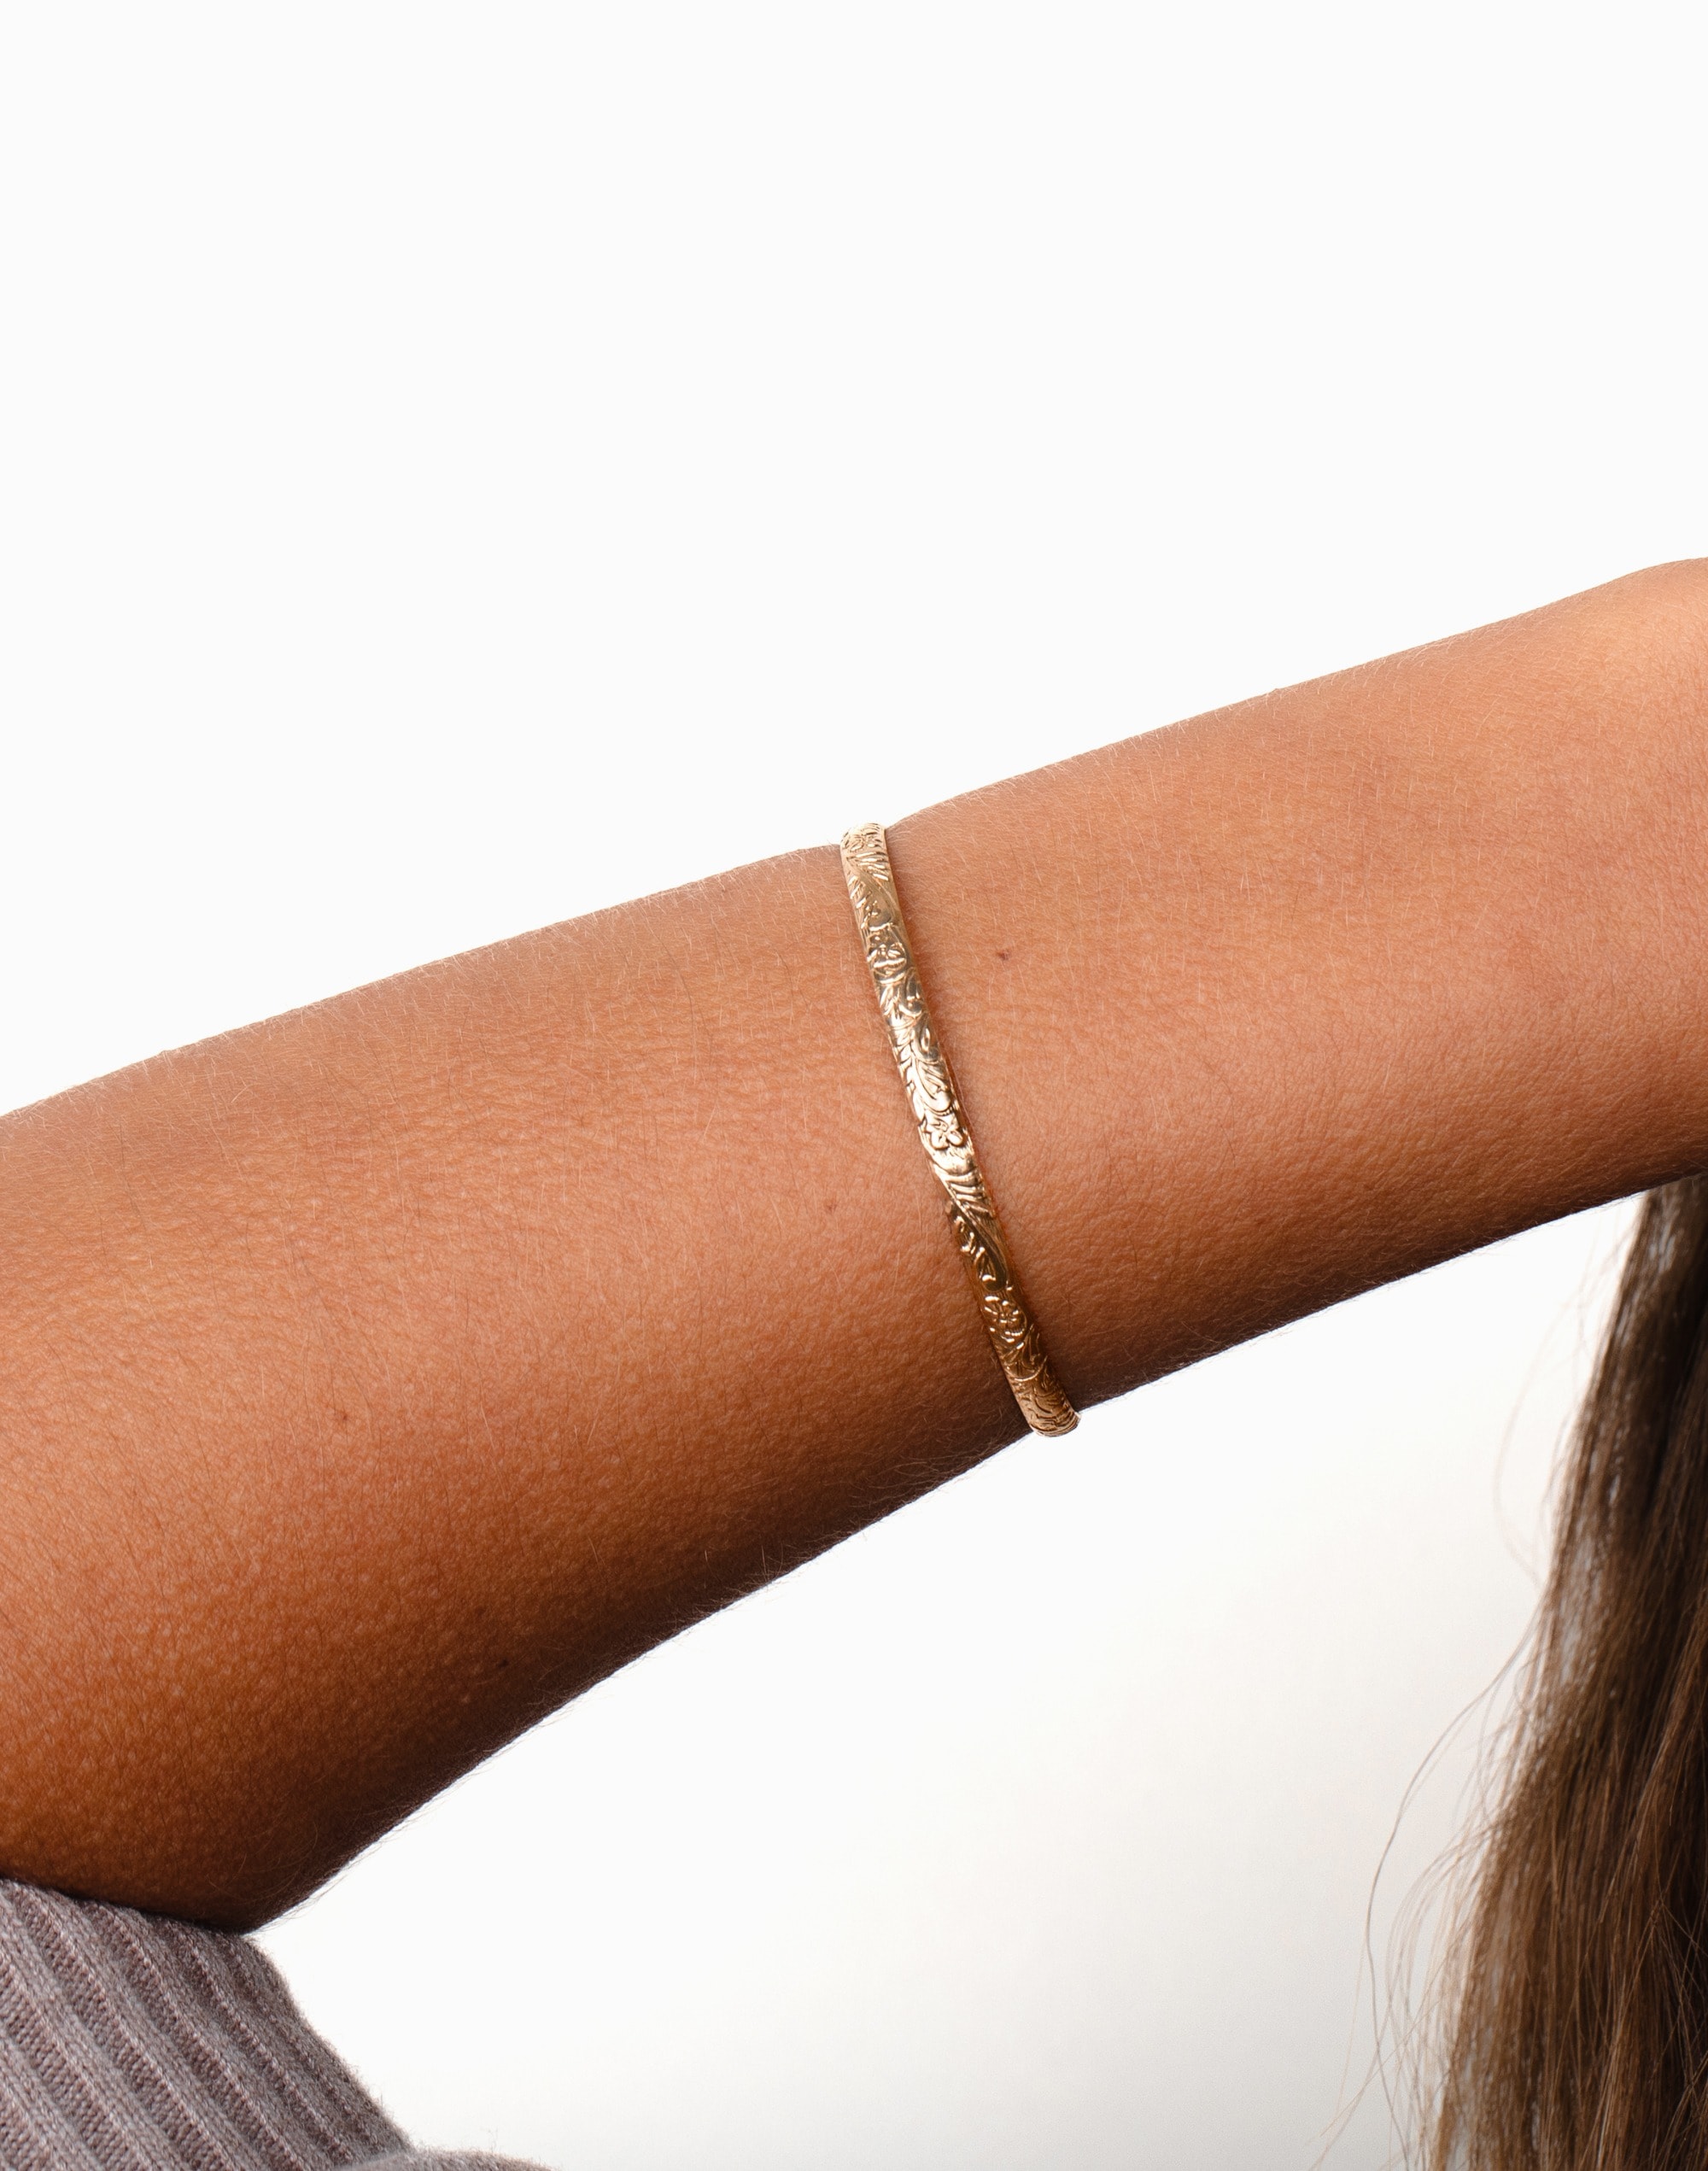 Situ Jewelry 14k Gold-Filled Kelei Bangle Bracelet